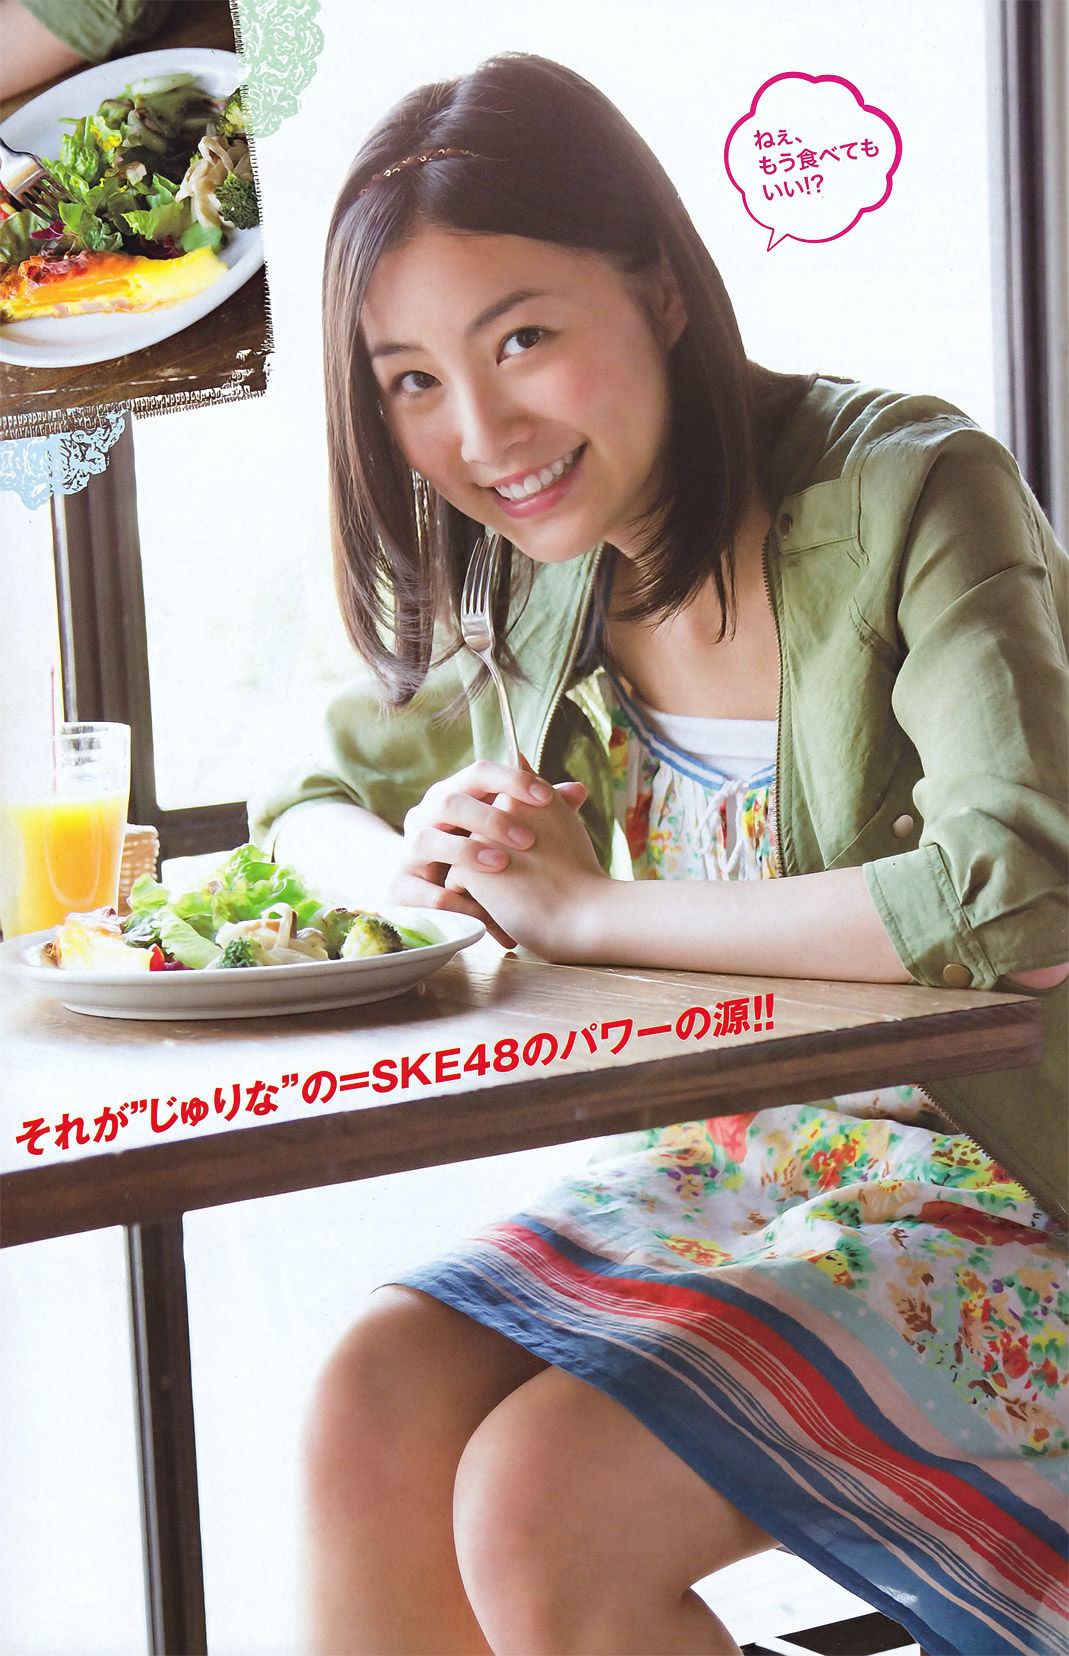 [Young Magazine] 2011年No.27 YM7 松井珠理奈 NMB48